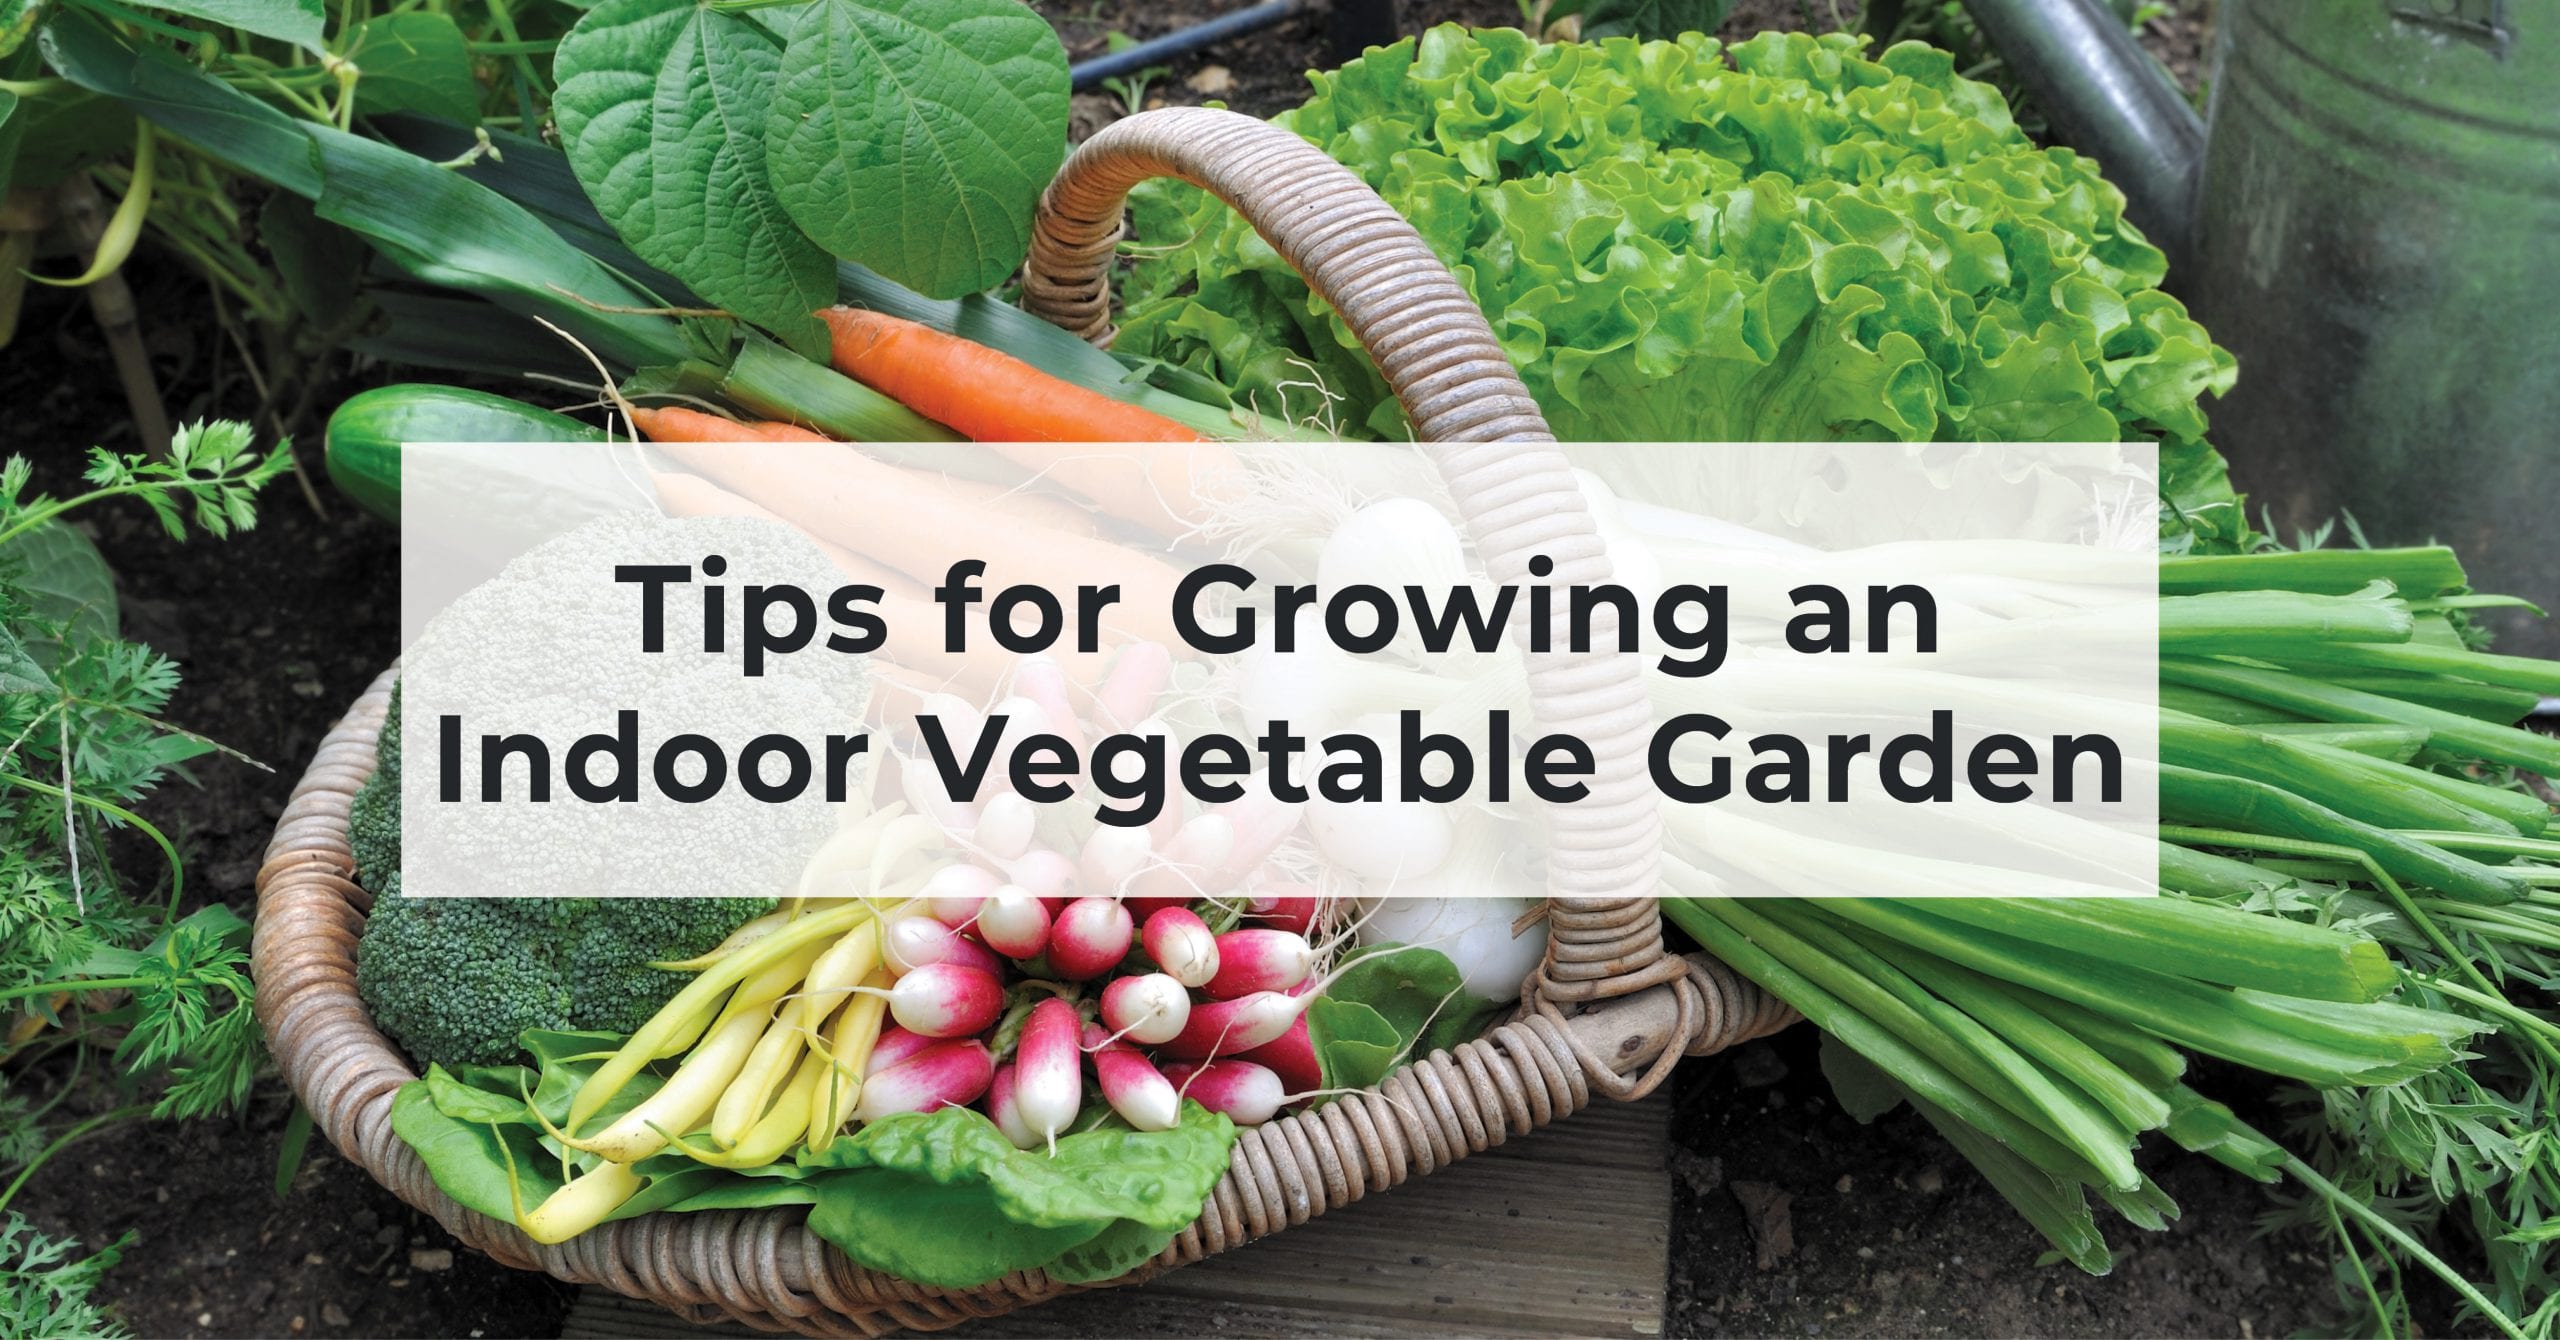 Tips for Starting an Indoor Vegetable Garden